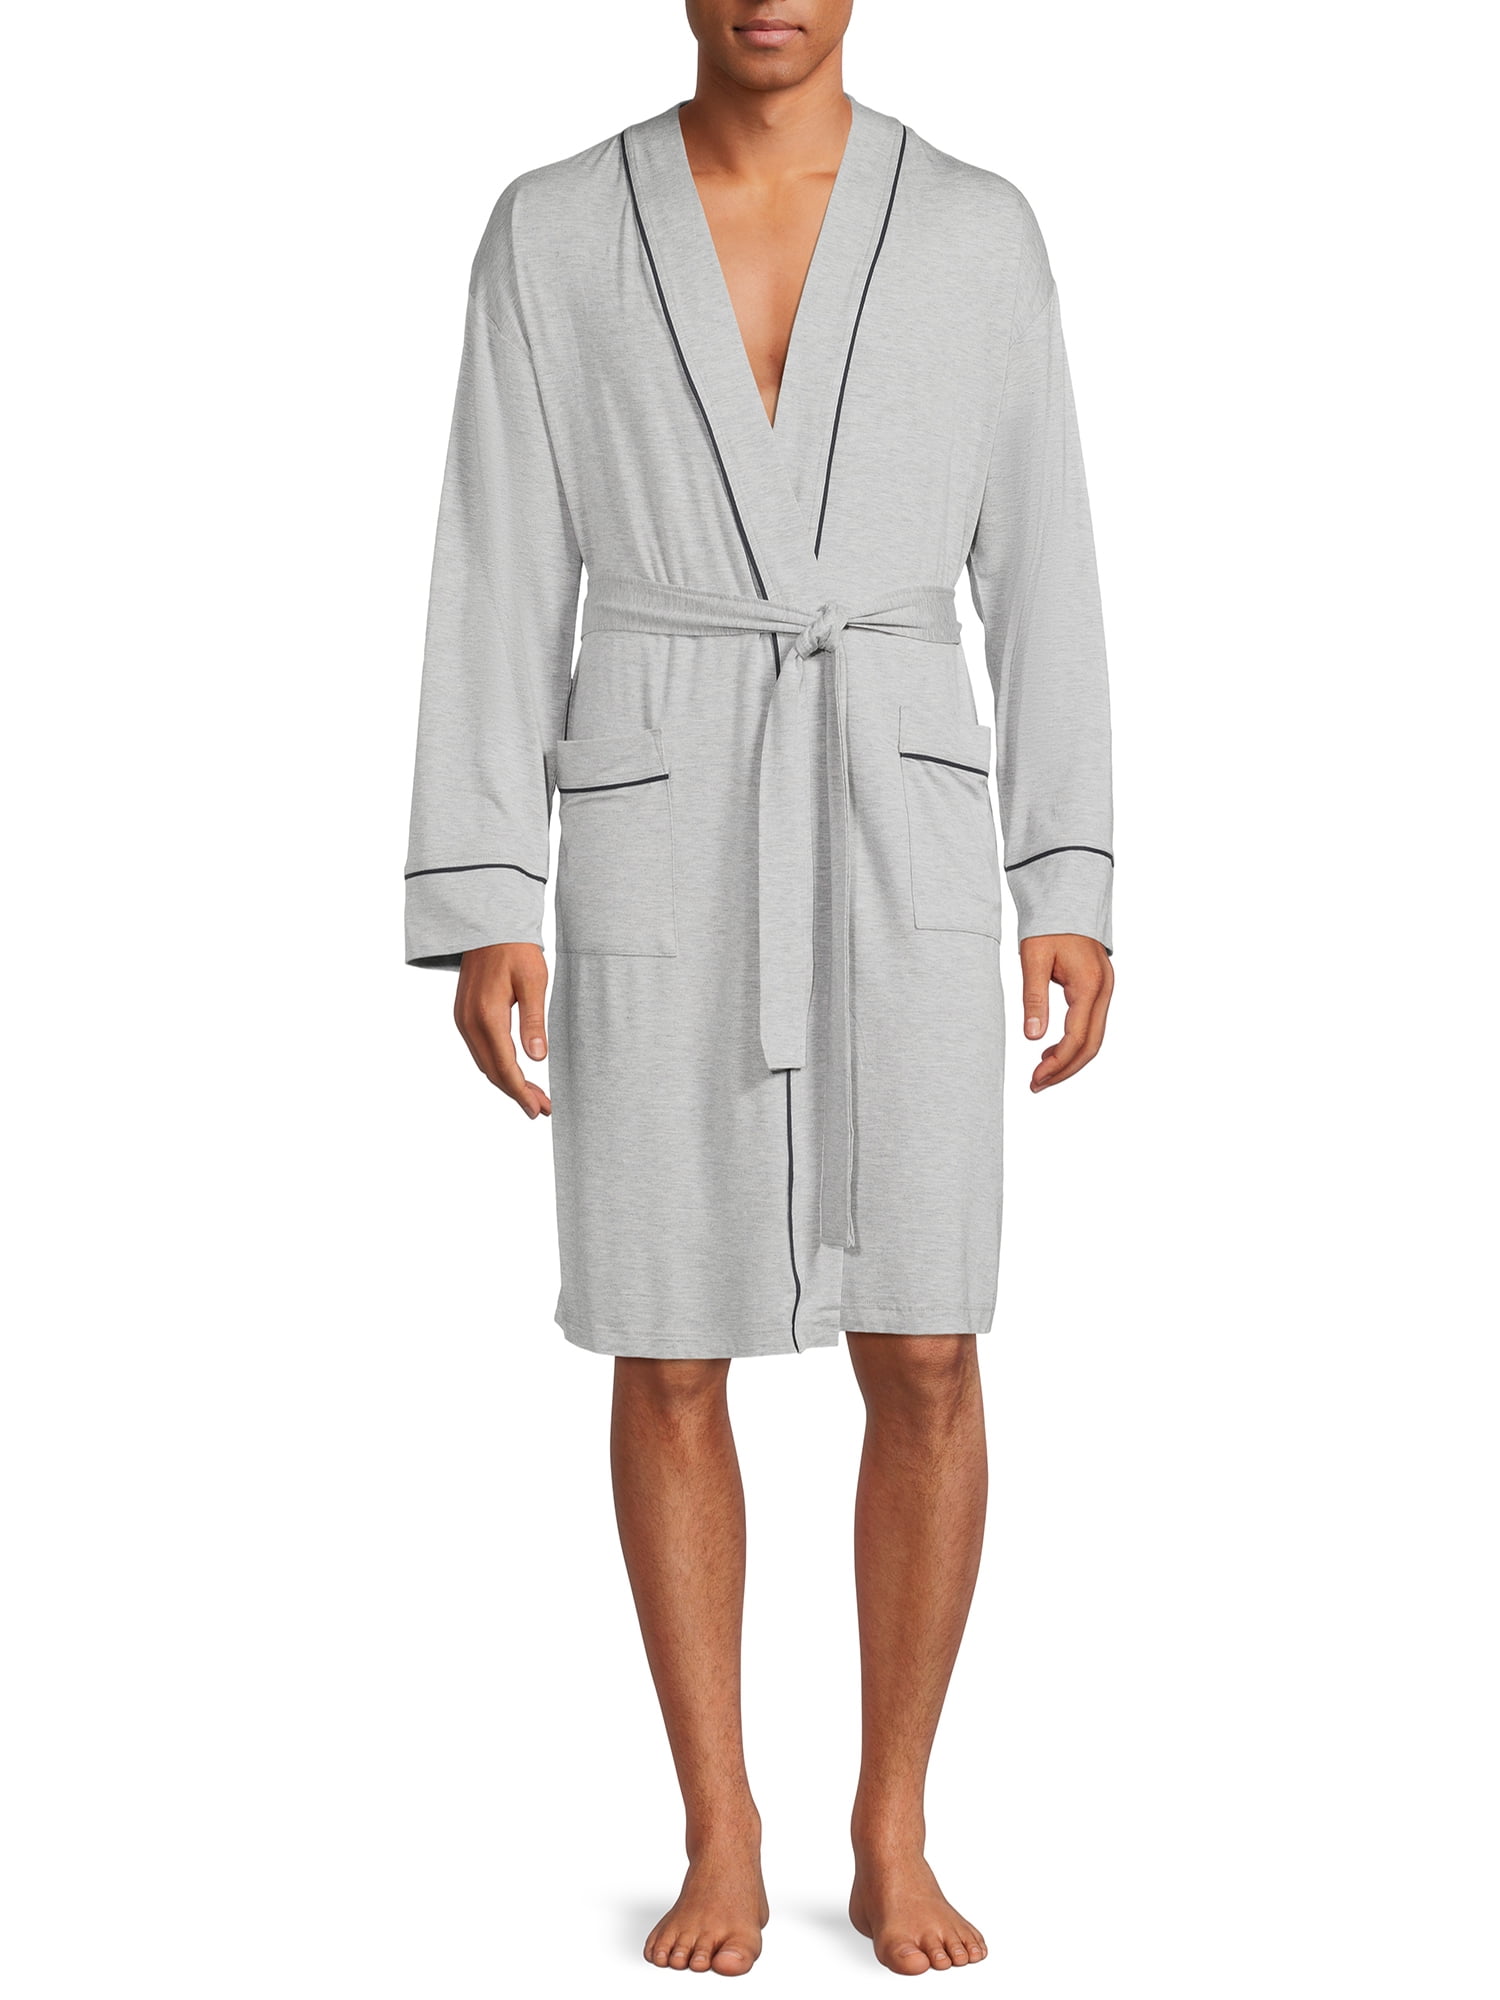 Sealy Men's Luxury Robe - Walmart.com